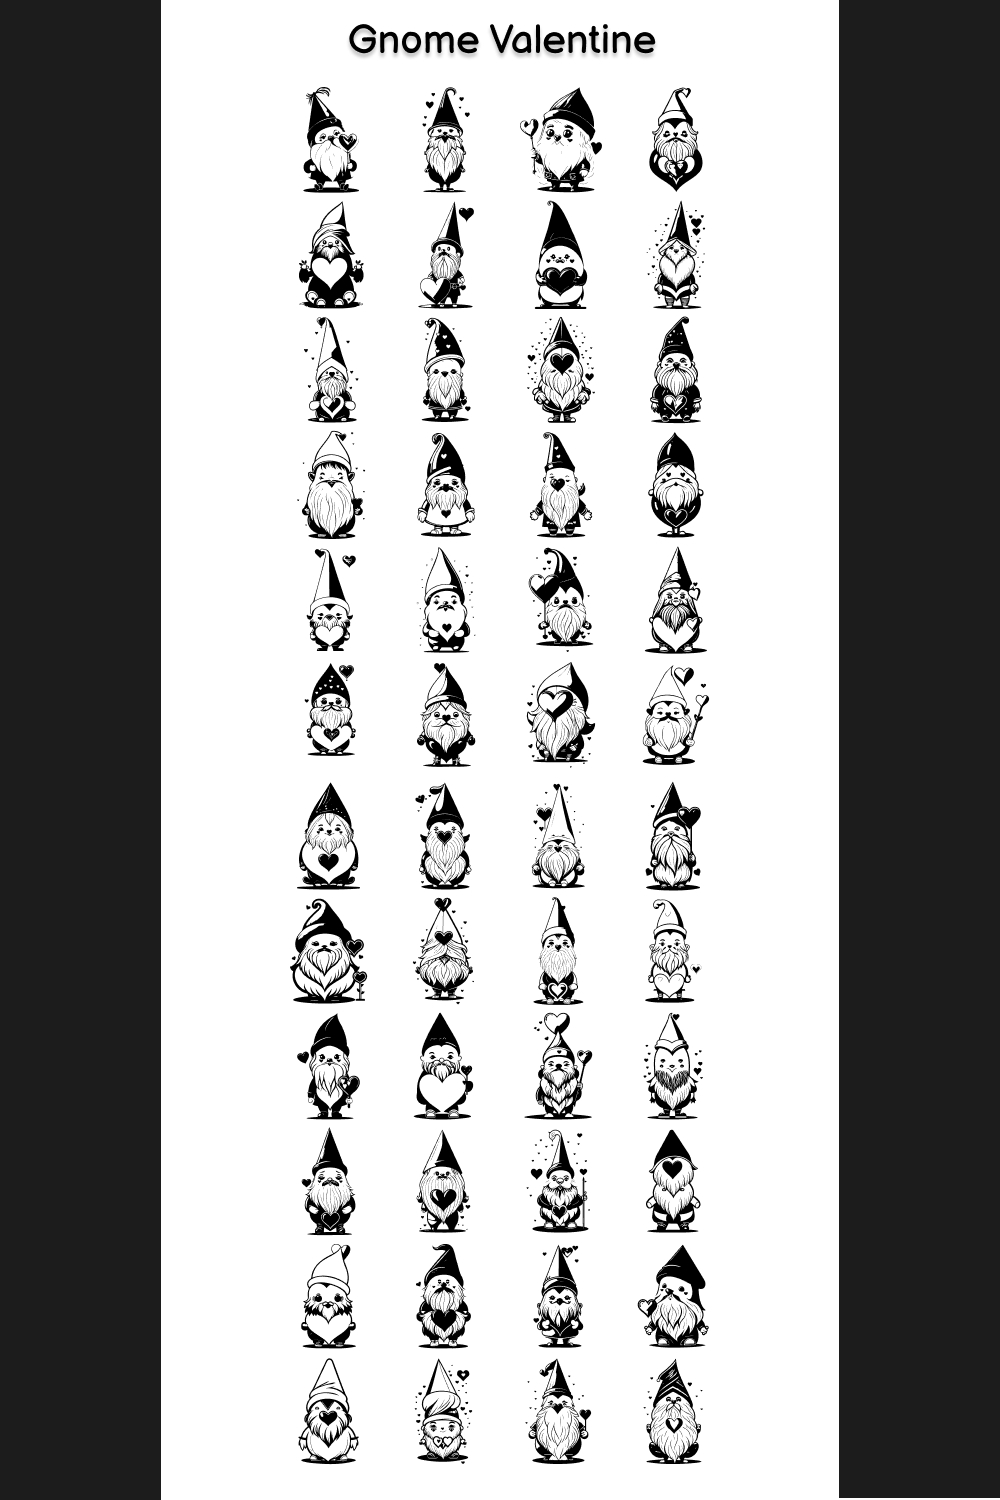 Gnome Valentine Element Draw Black pinterest preview image.